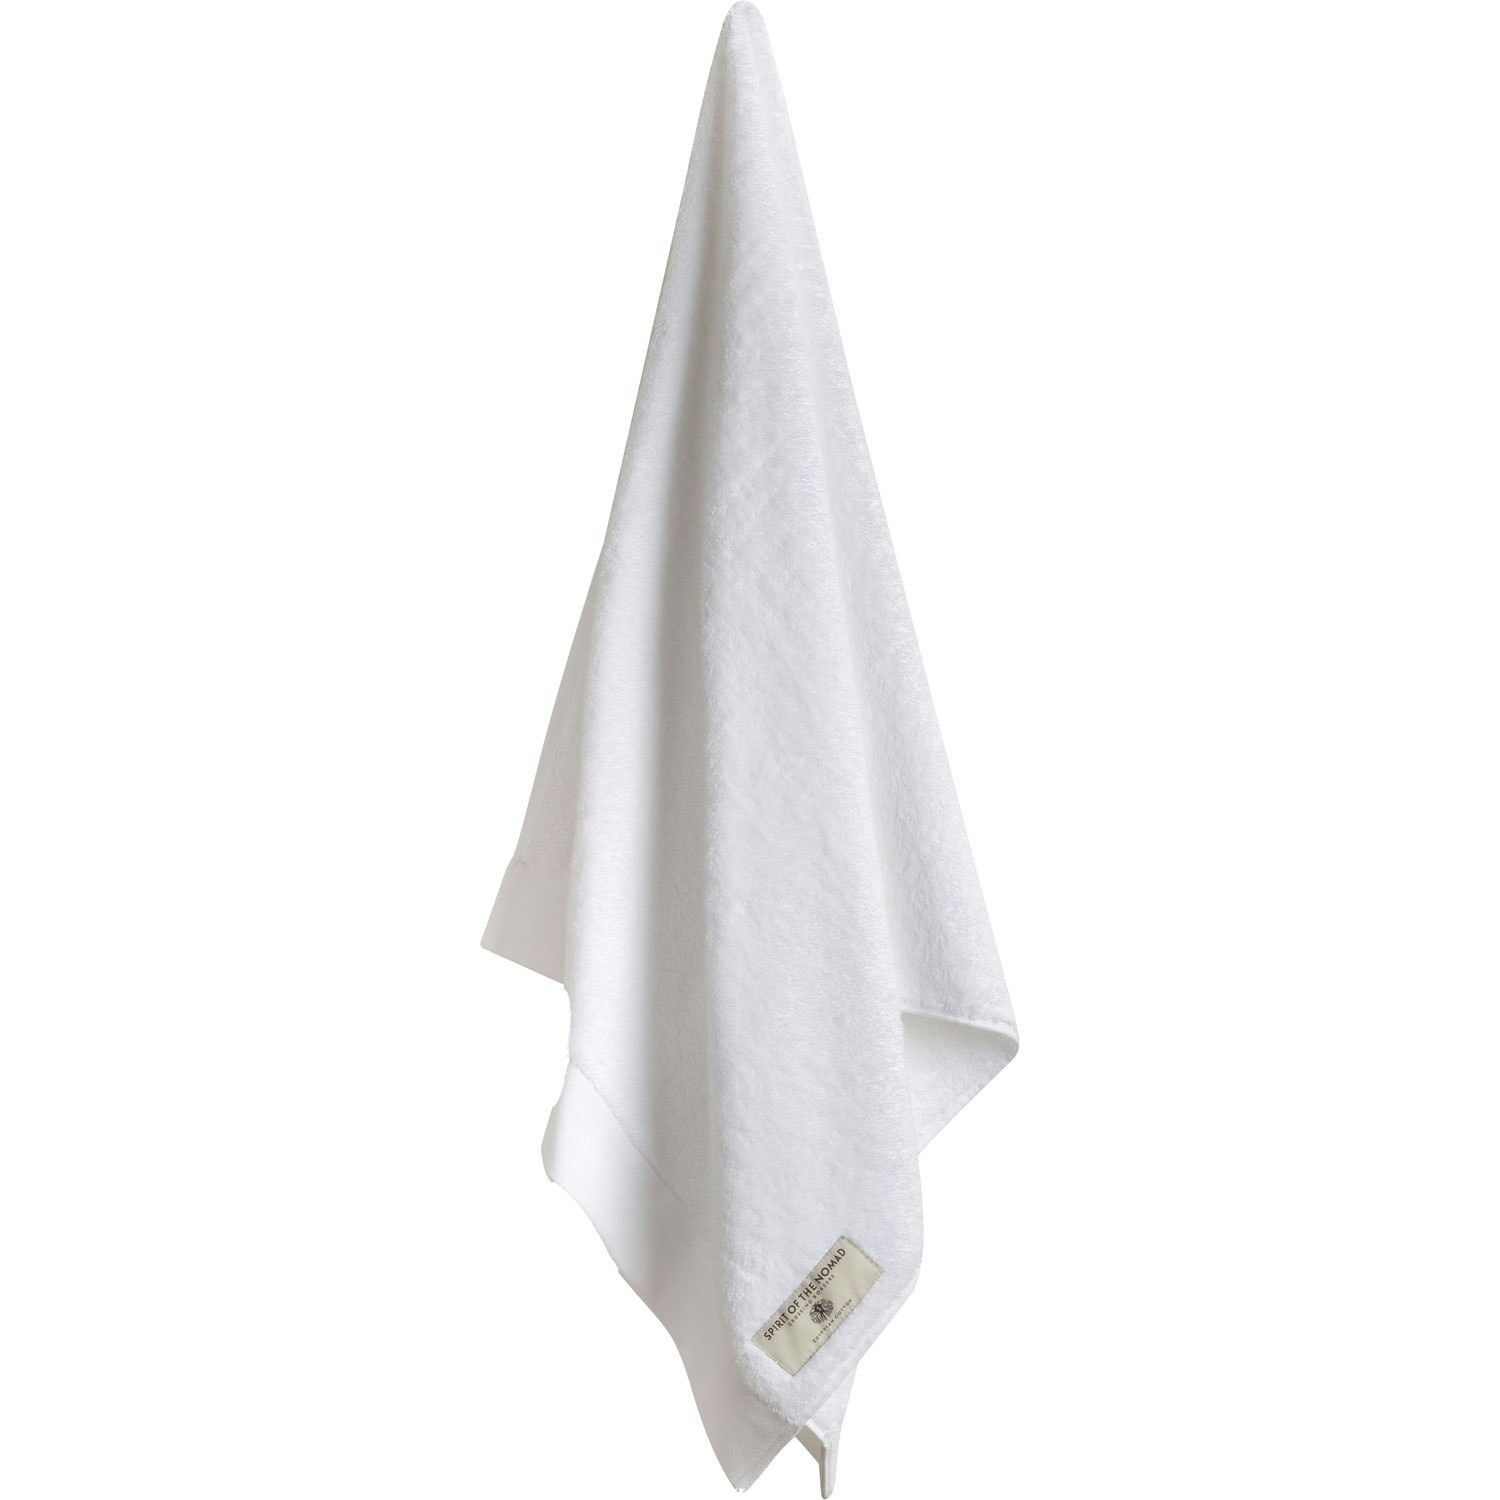 https://royaldesign.com/image/2/spirit-of-the-nomad-spirit-towel-70x140-cm-3